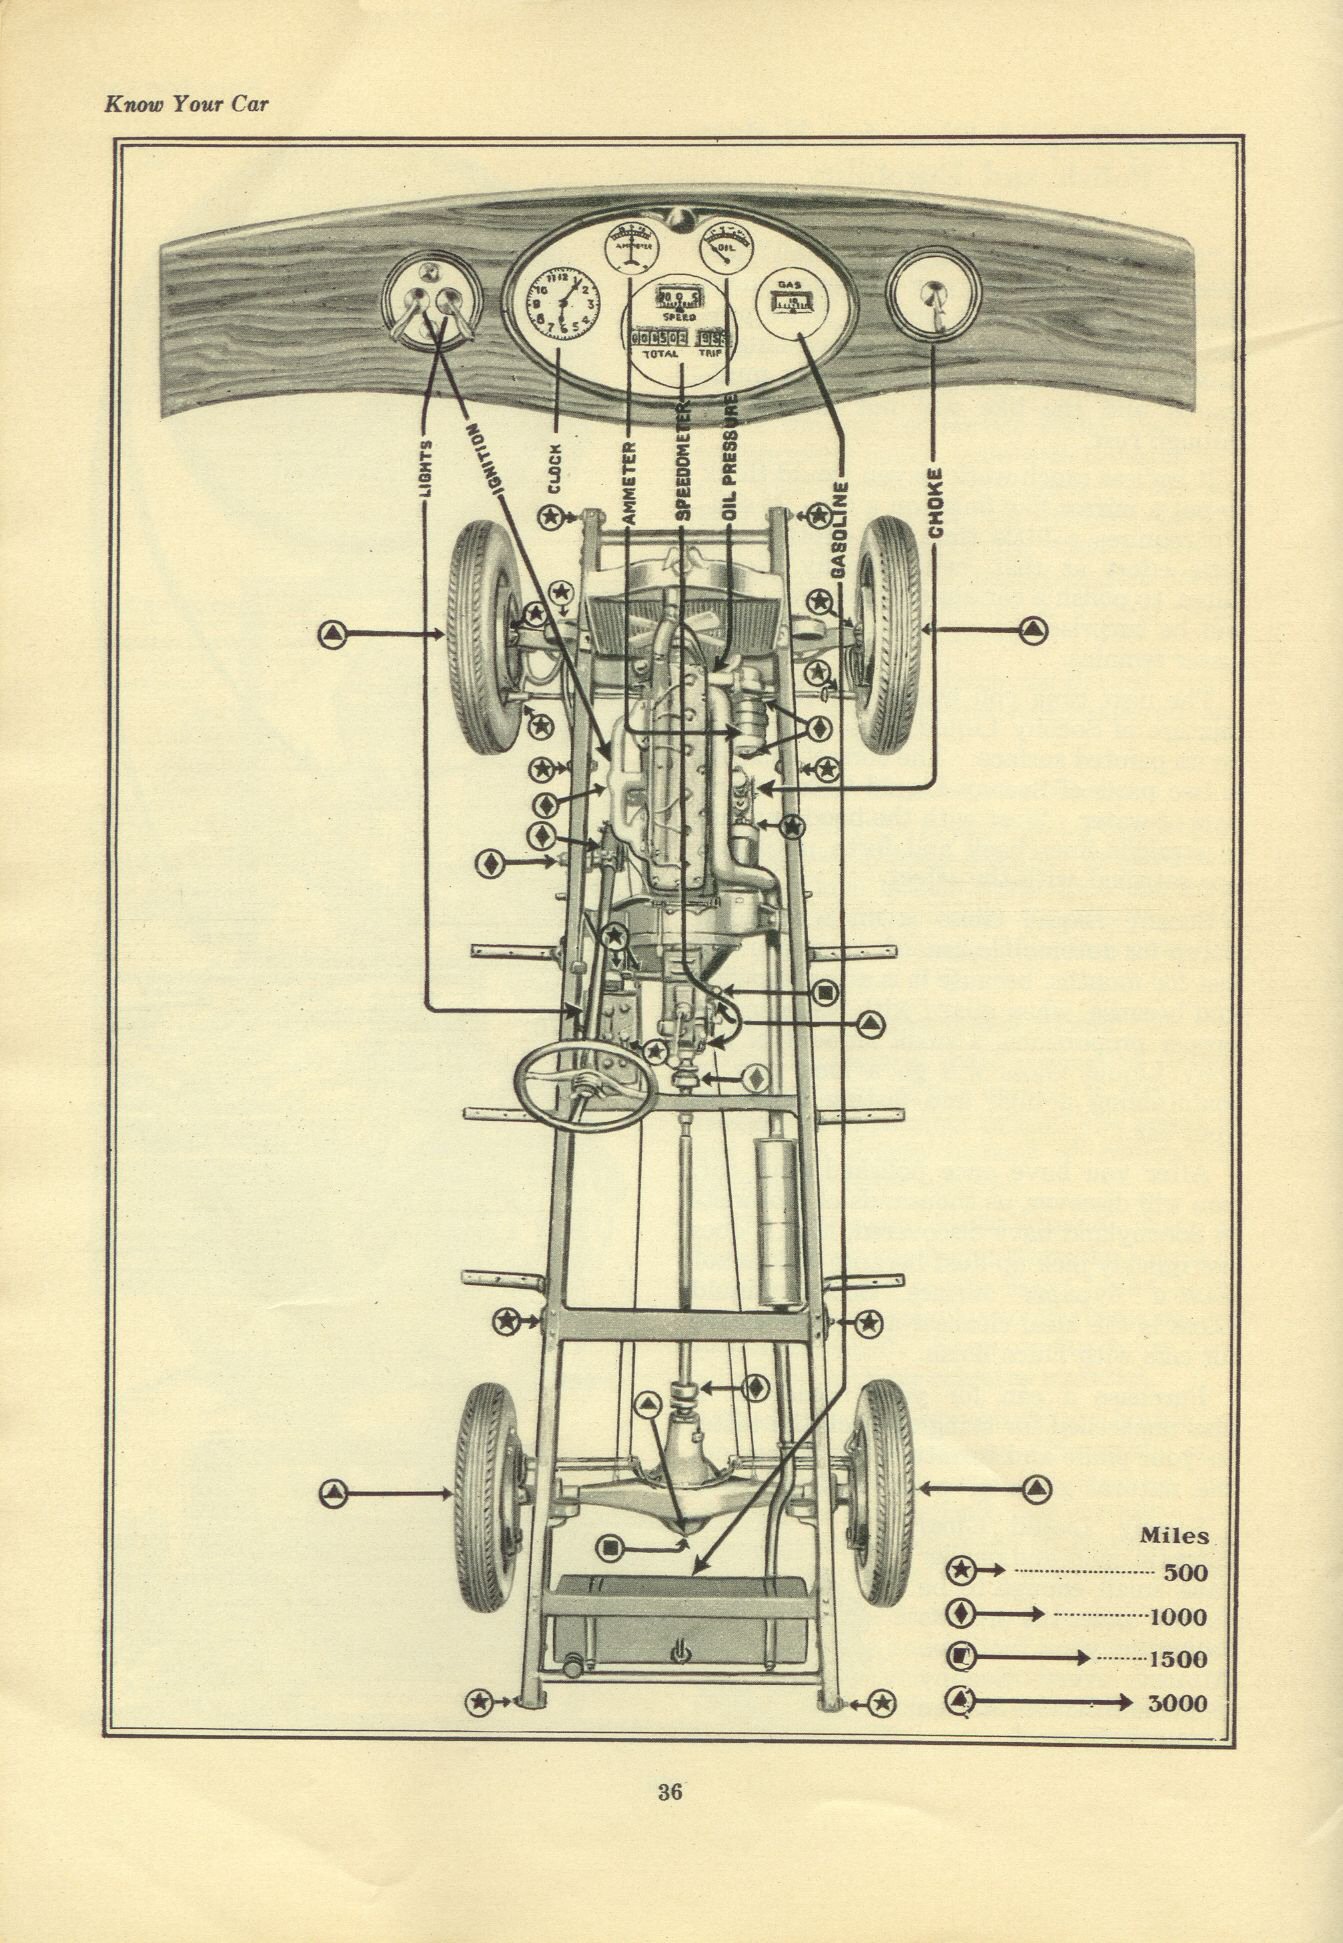 1928 Know Your Car Handbook Page 27